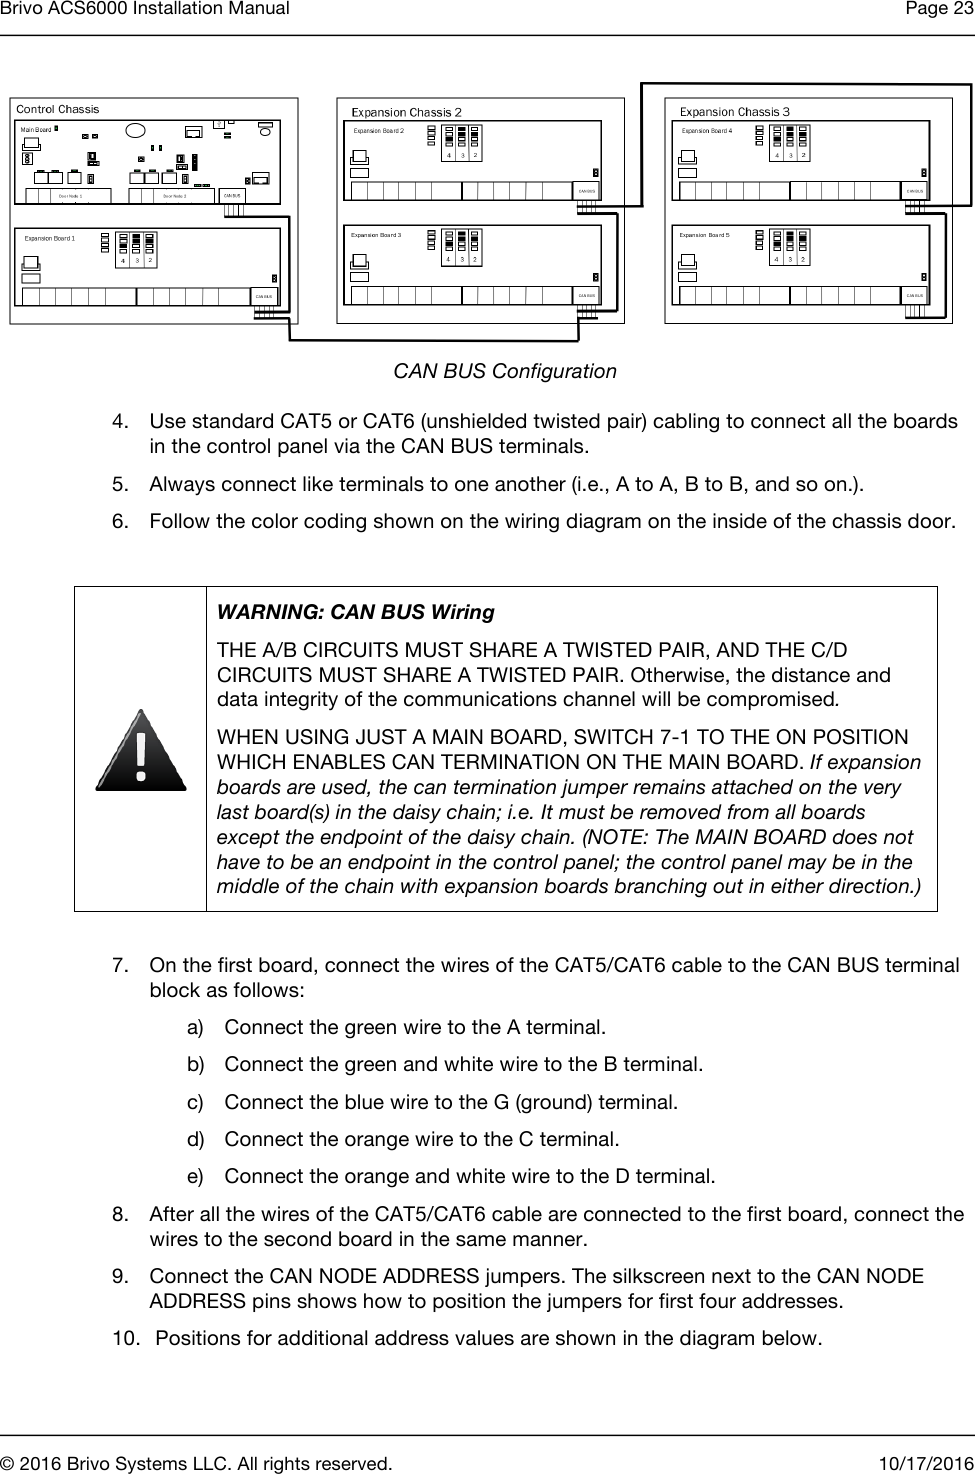 cat6 wiring diagram pdf  | 723 x 413